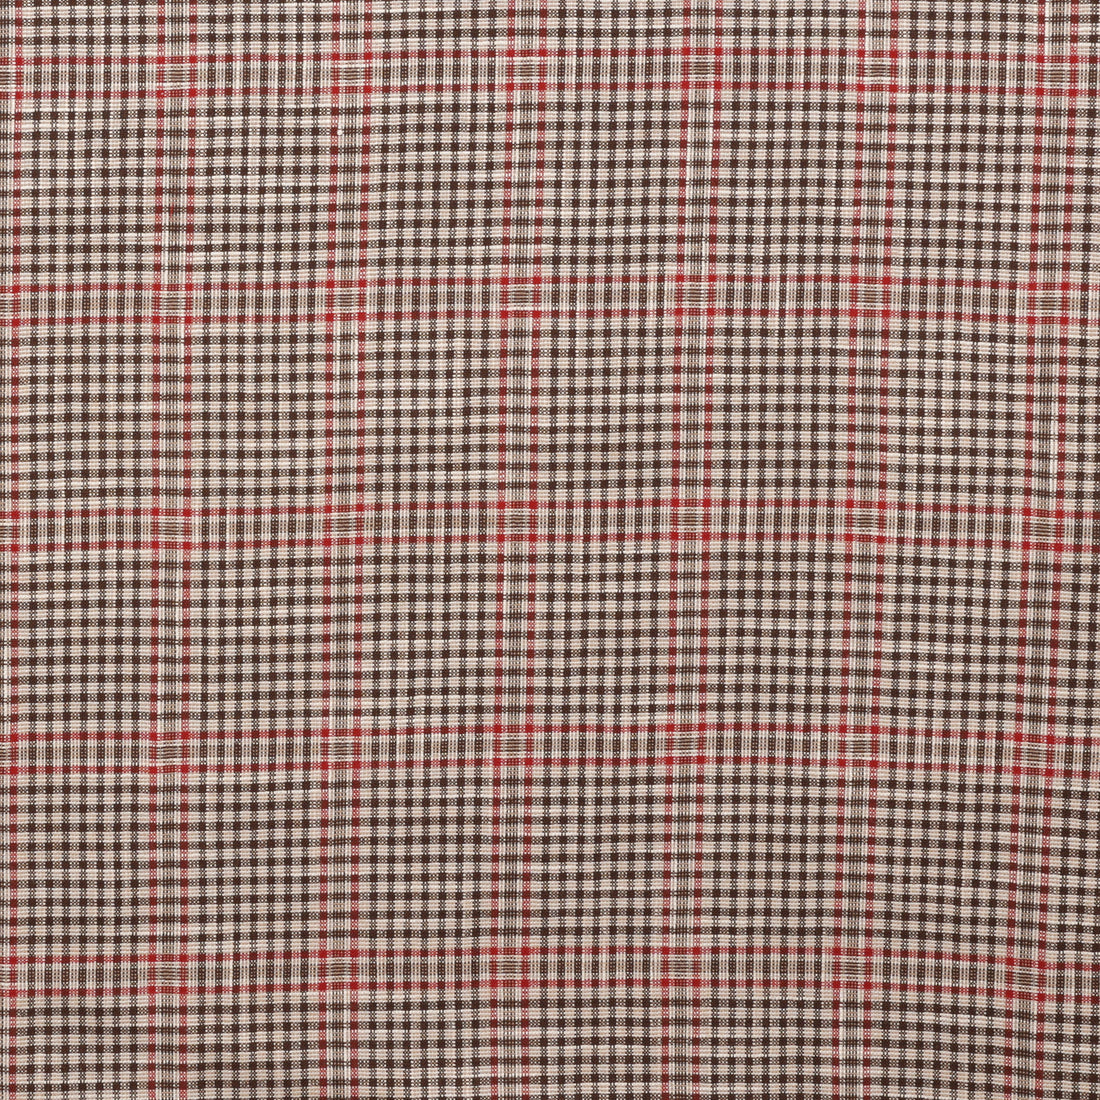 Wool Blend - Suiting - Plaid - Red Brown Beige